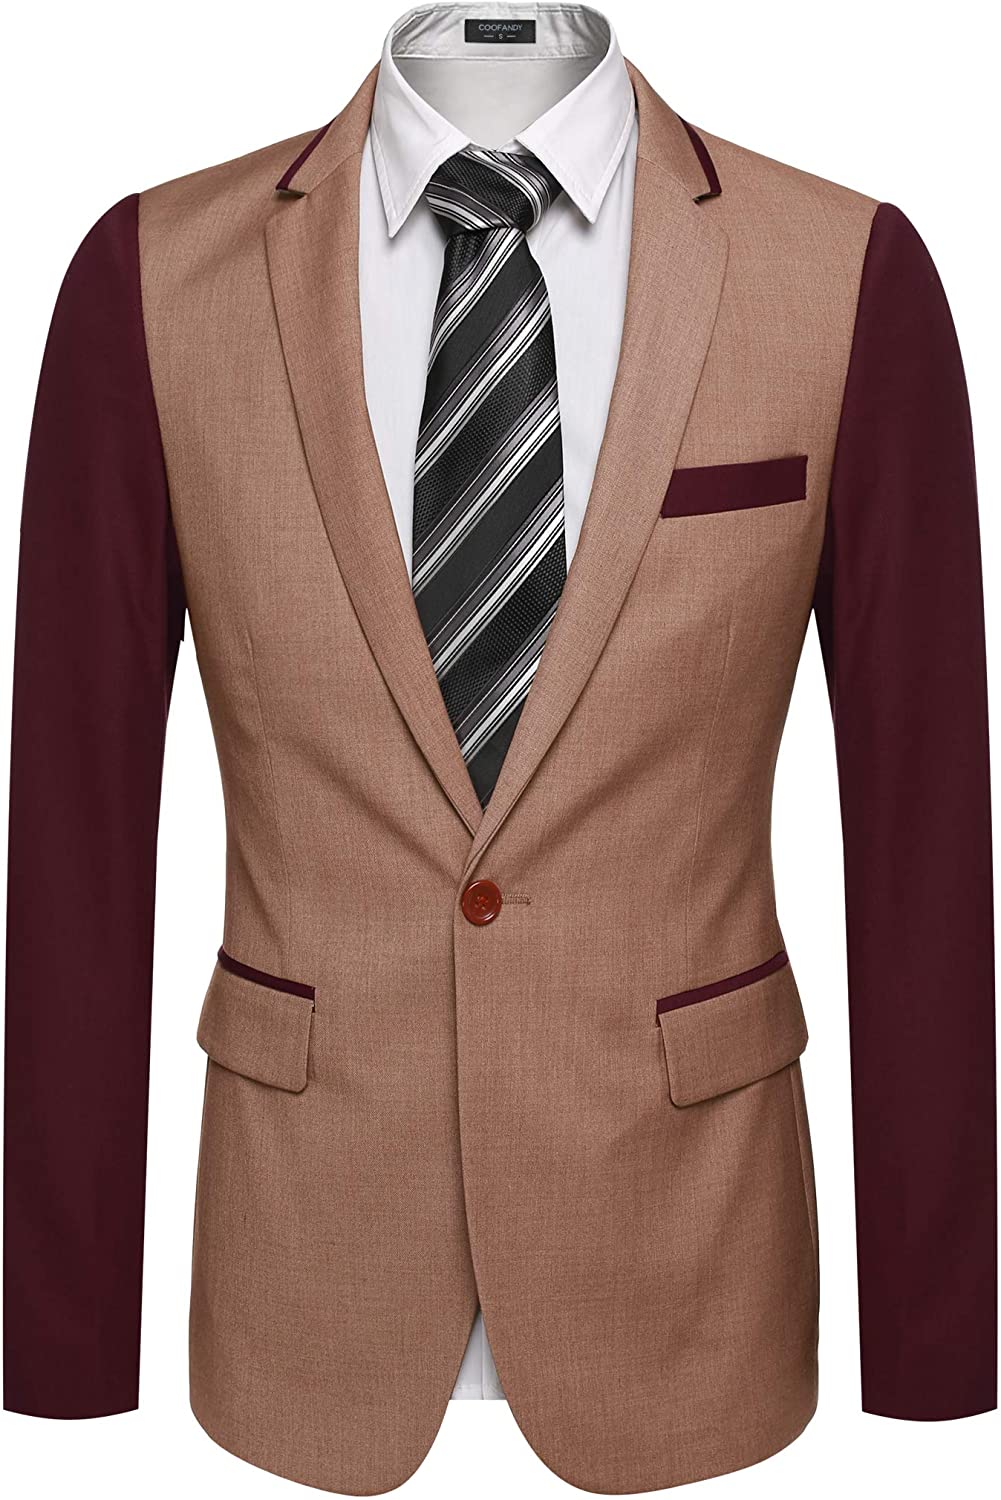 COOFANDY Men's Suit Jacket Slim Fit Casual One Button Blazer Jacket | eBay